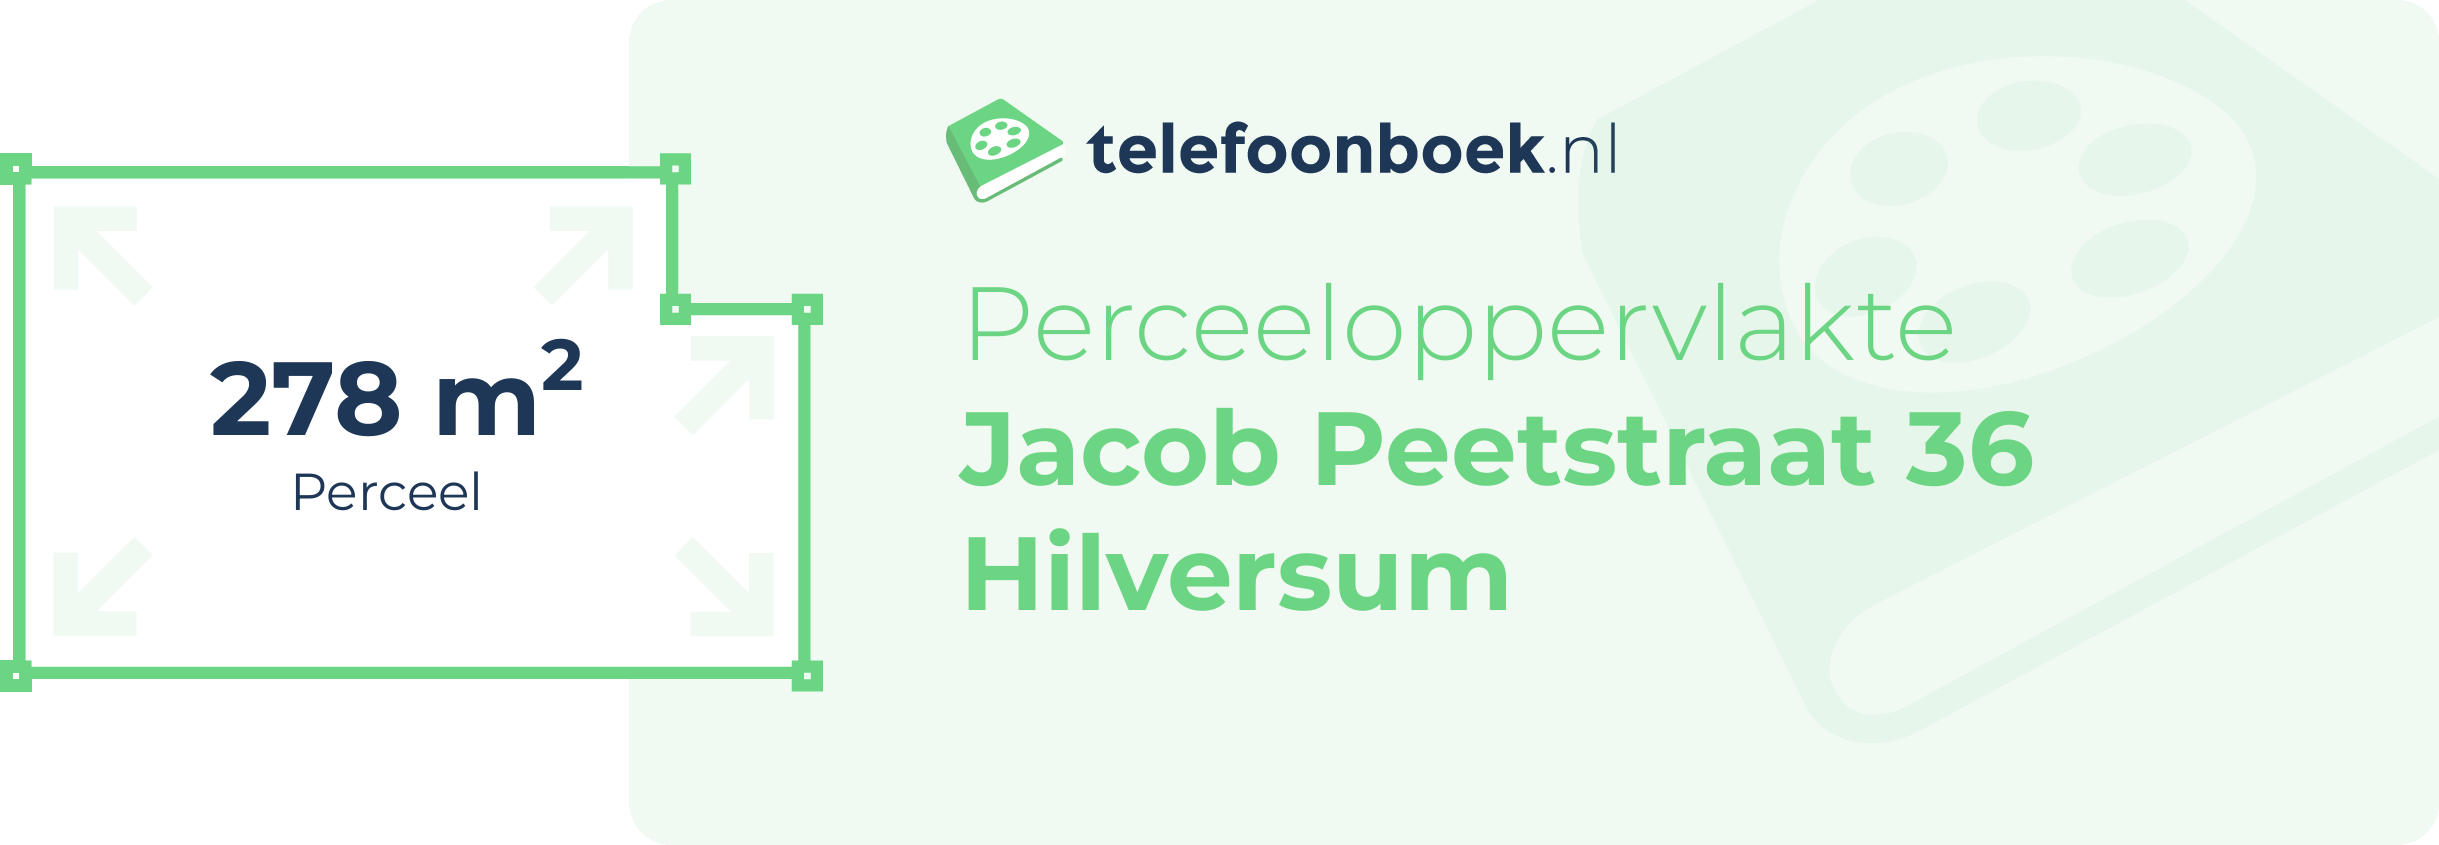 Perceeloppervlakte Jacob Peetstraat 36 Hilversum